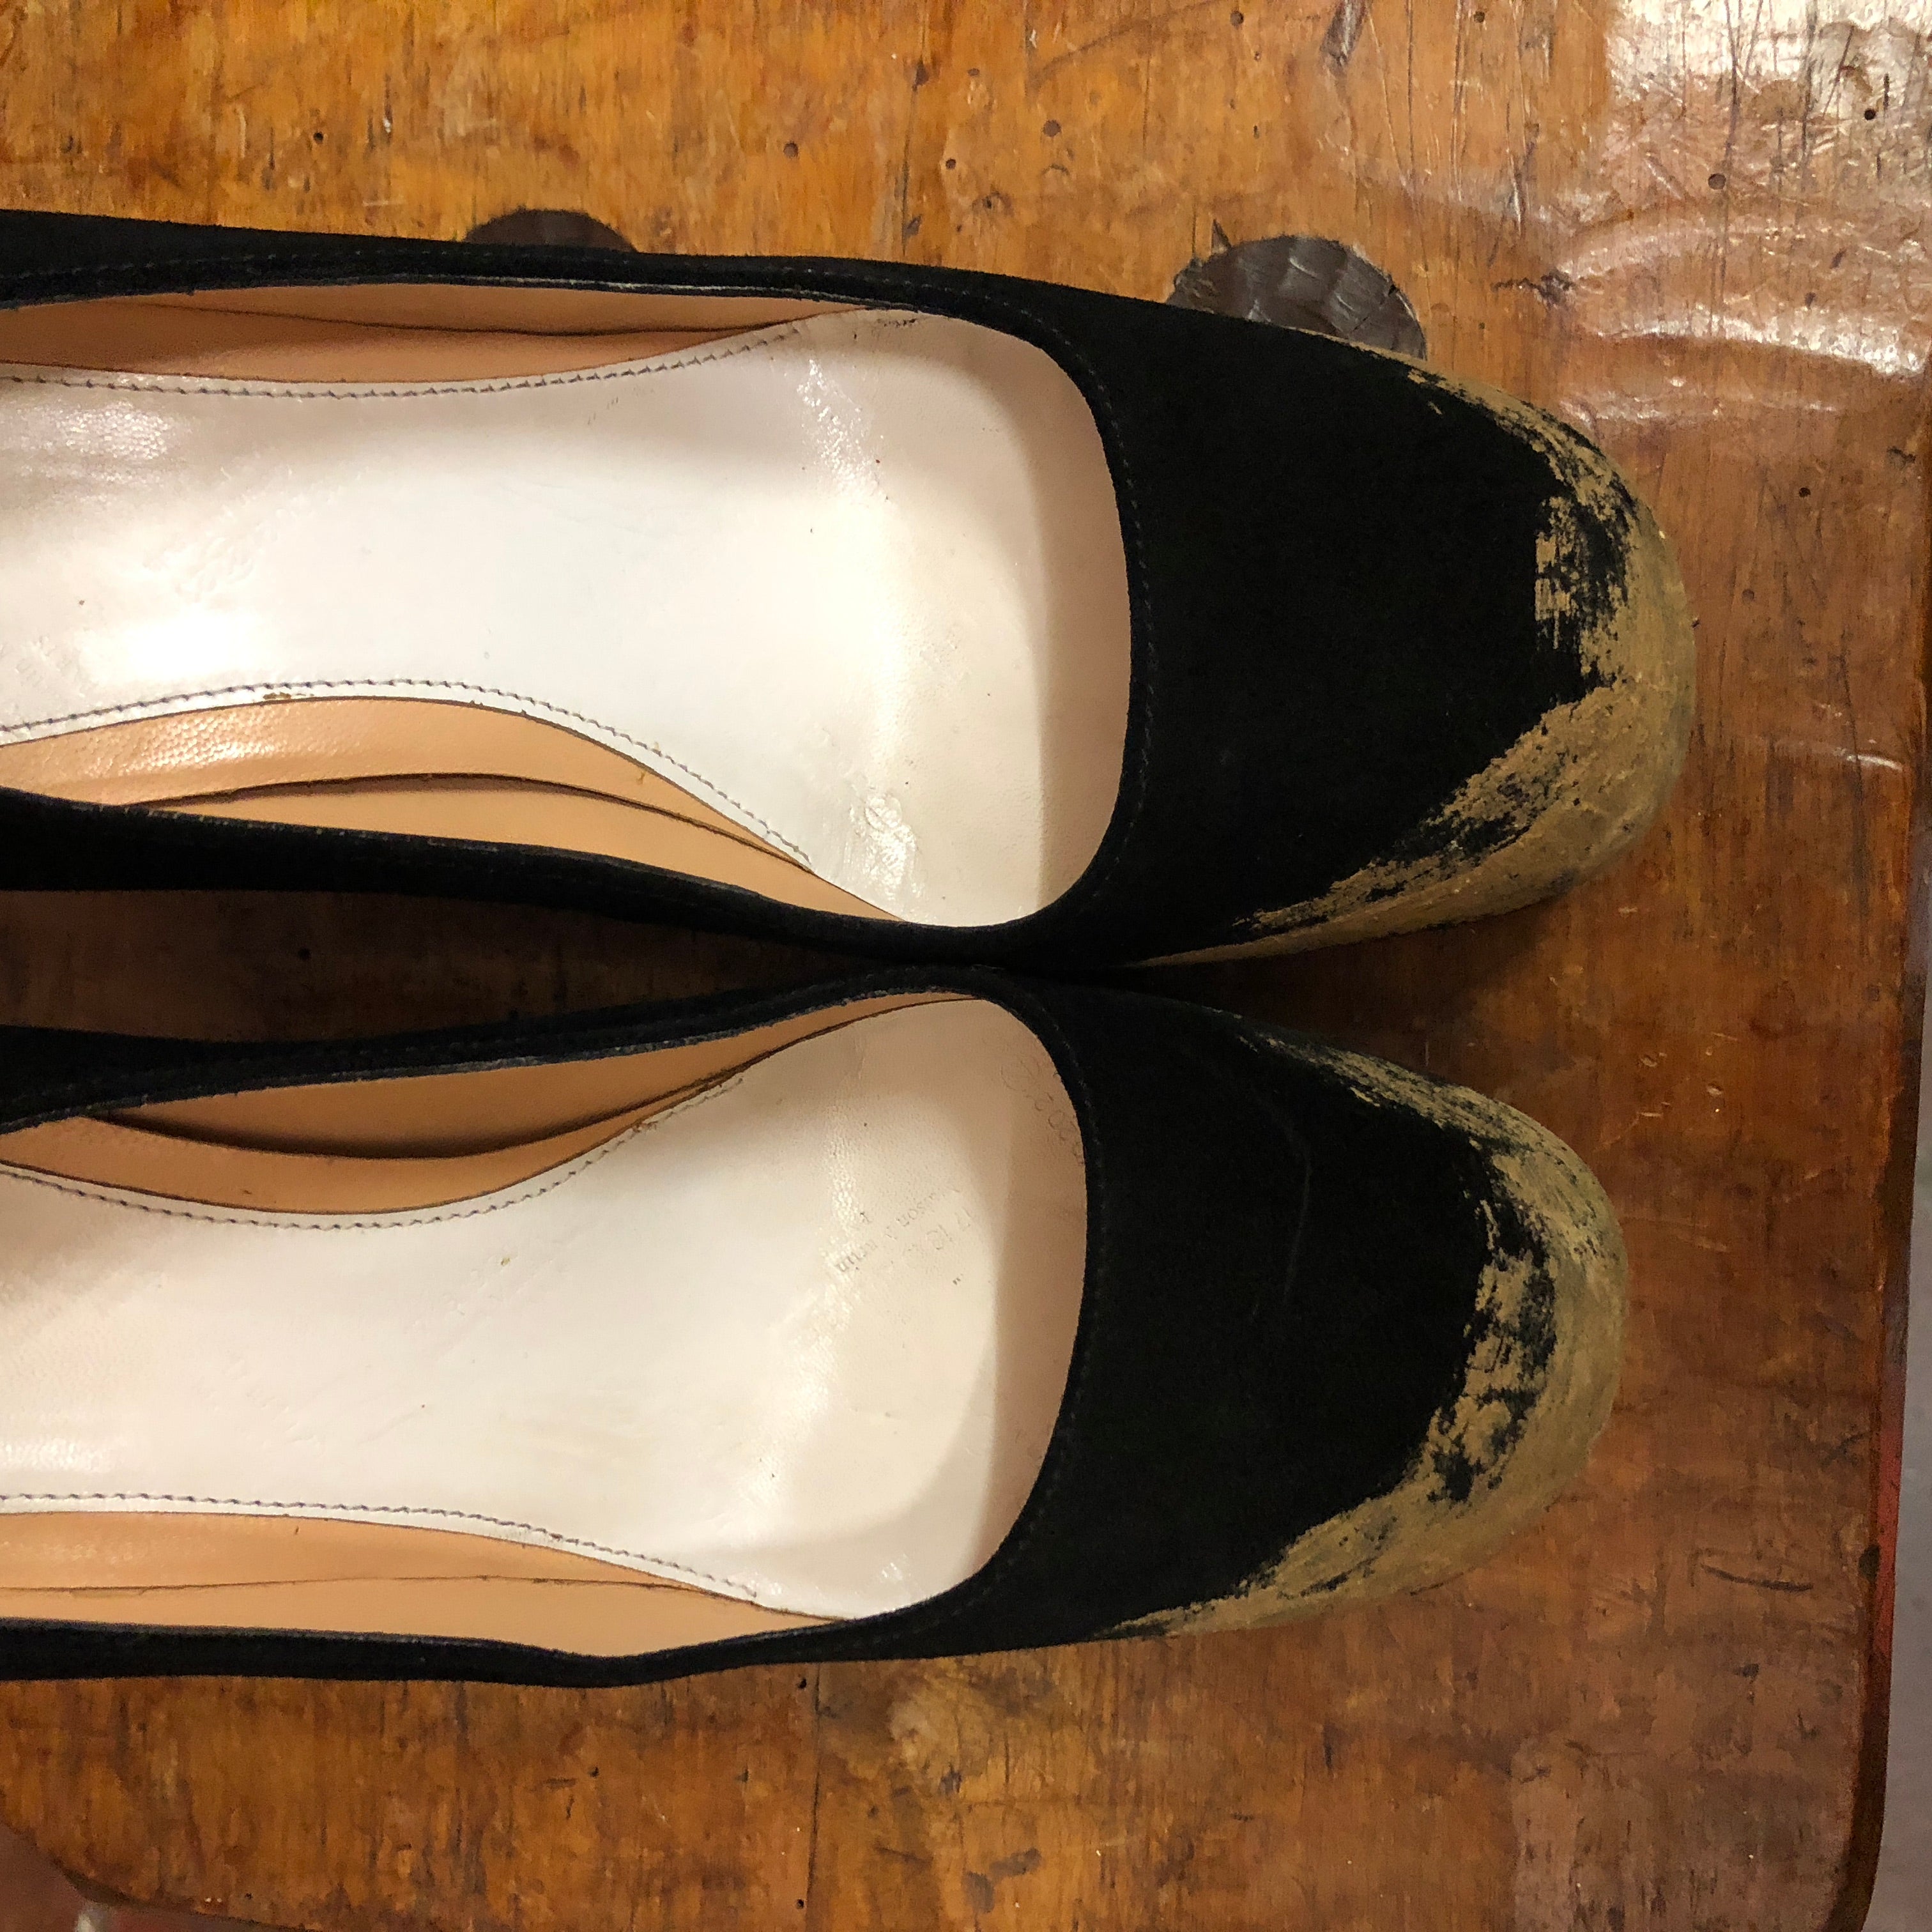 MARTIN MARGIELA 'muddy' suede heels